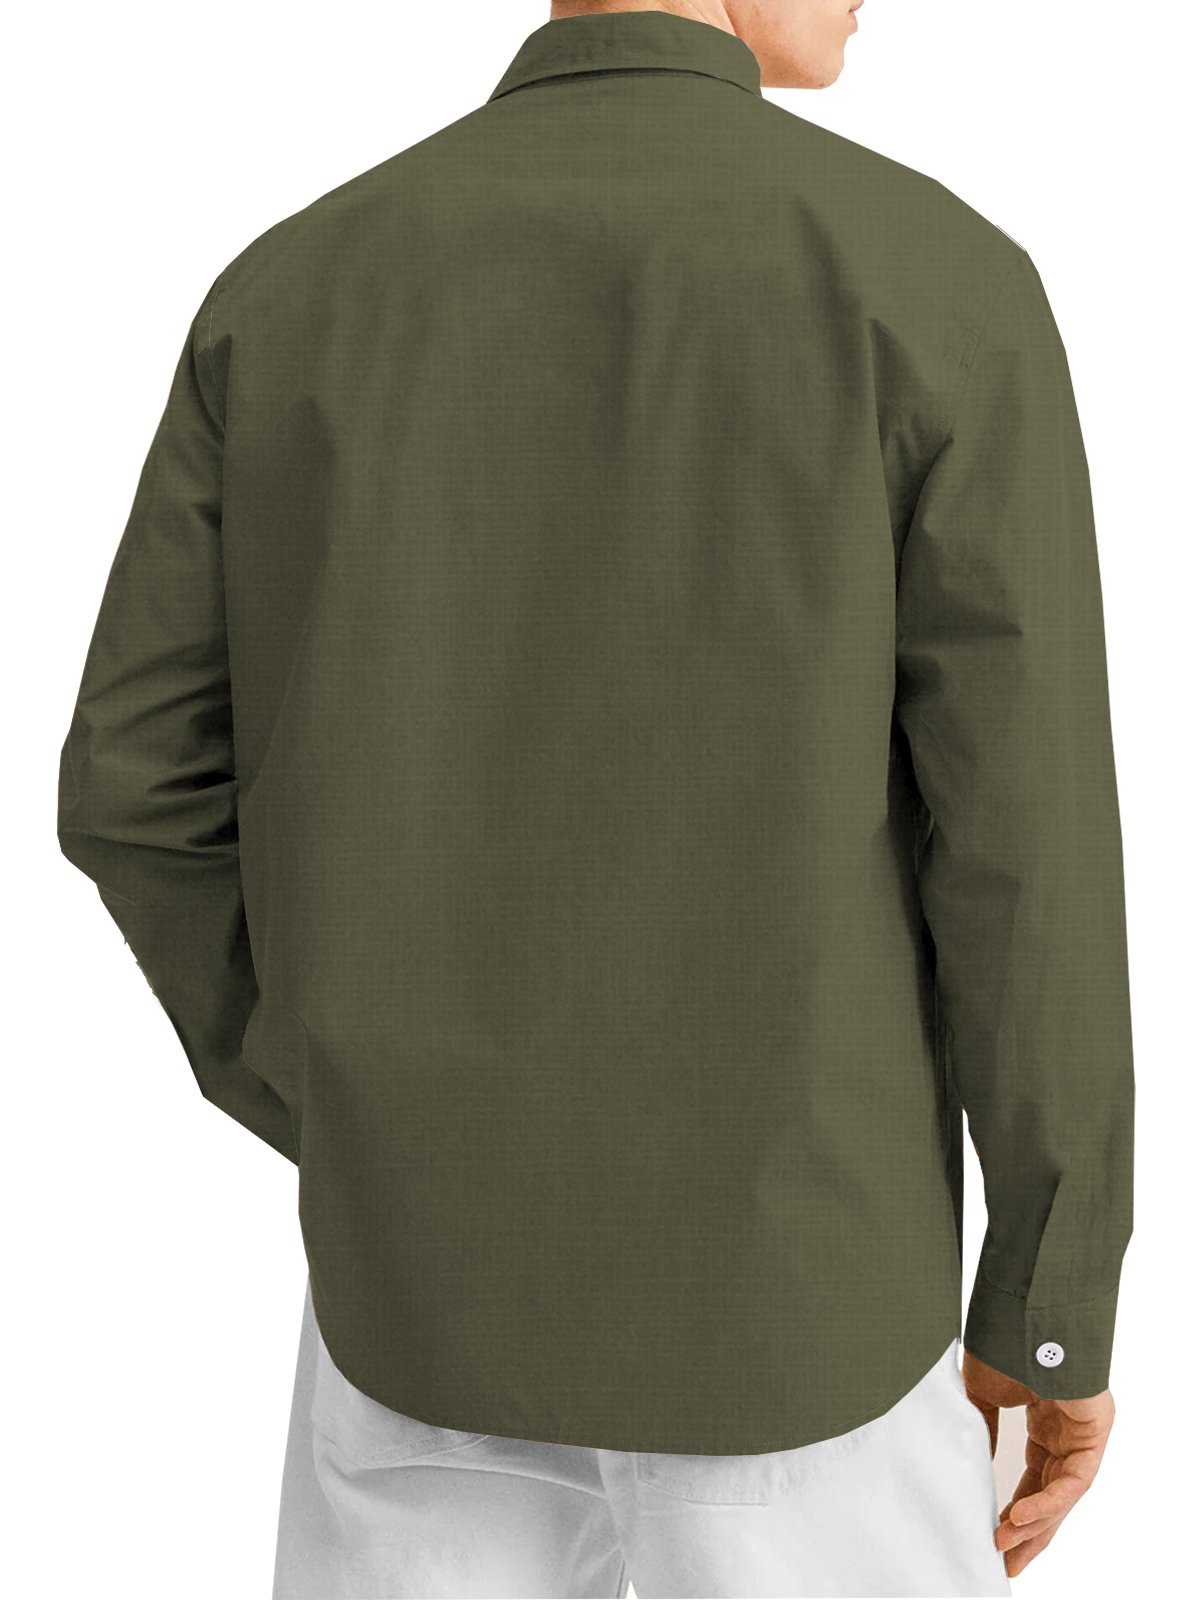 Geometric stripe printed cotton linen collar and comfortable linen shirt